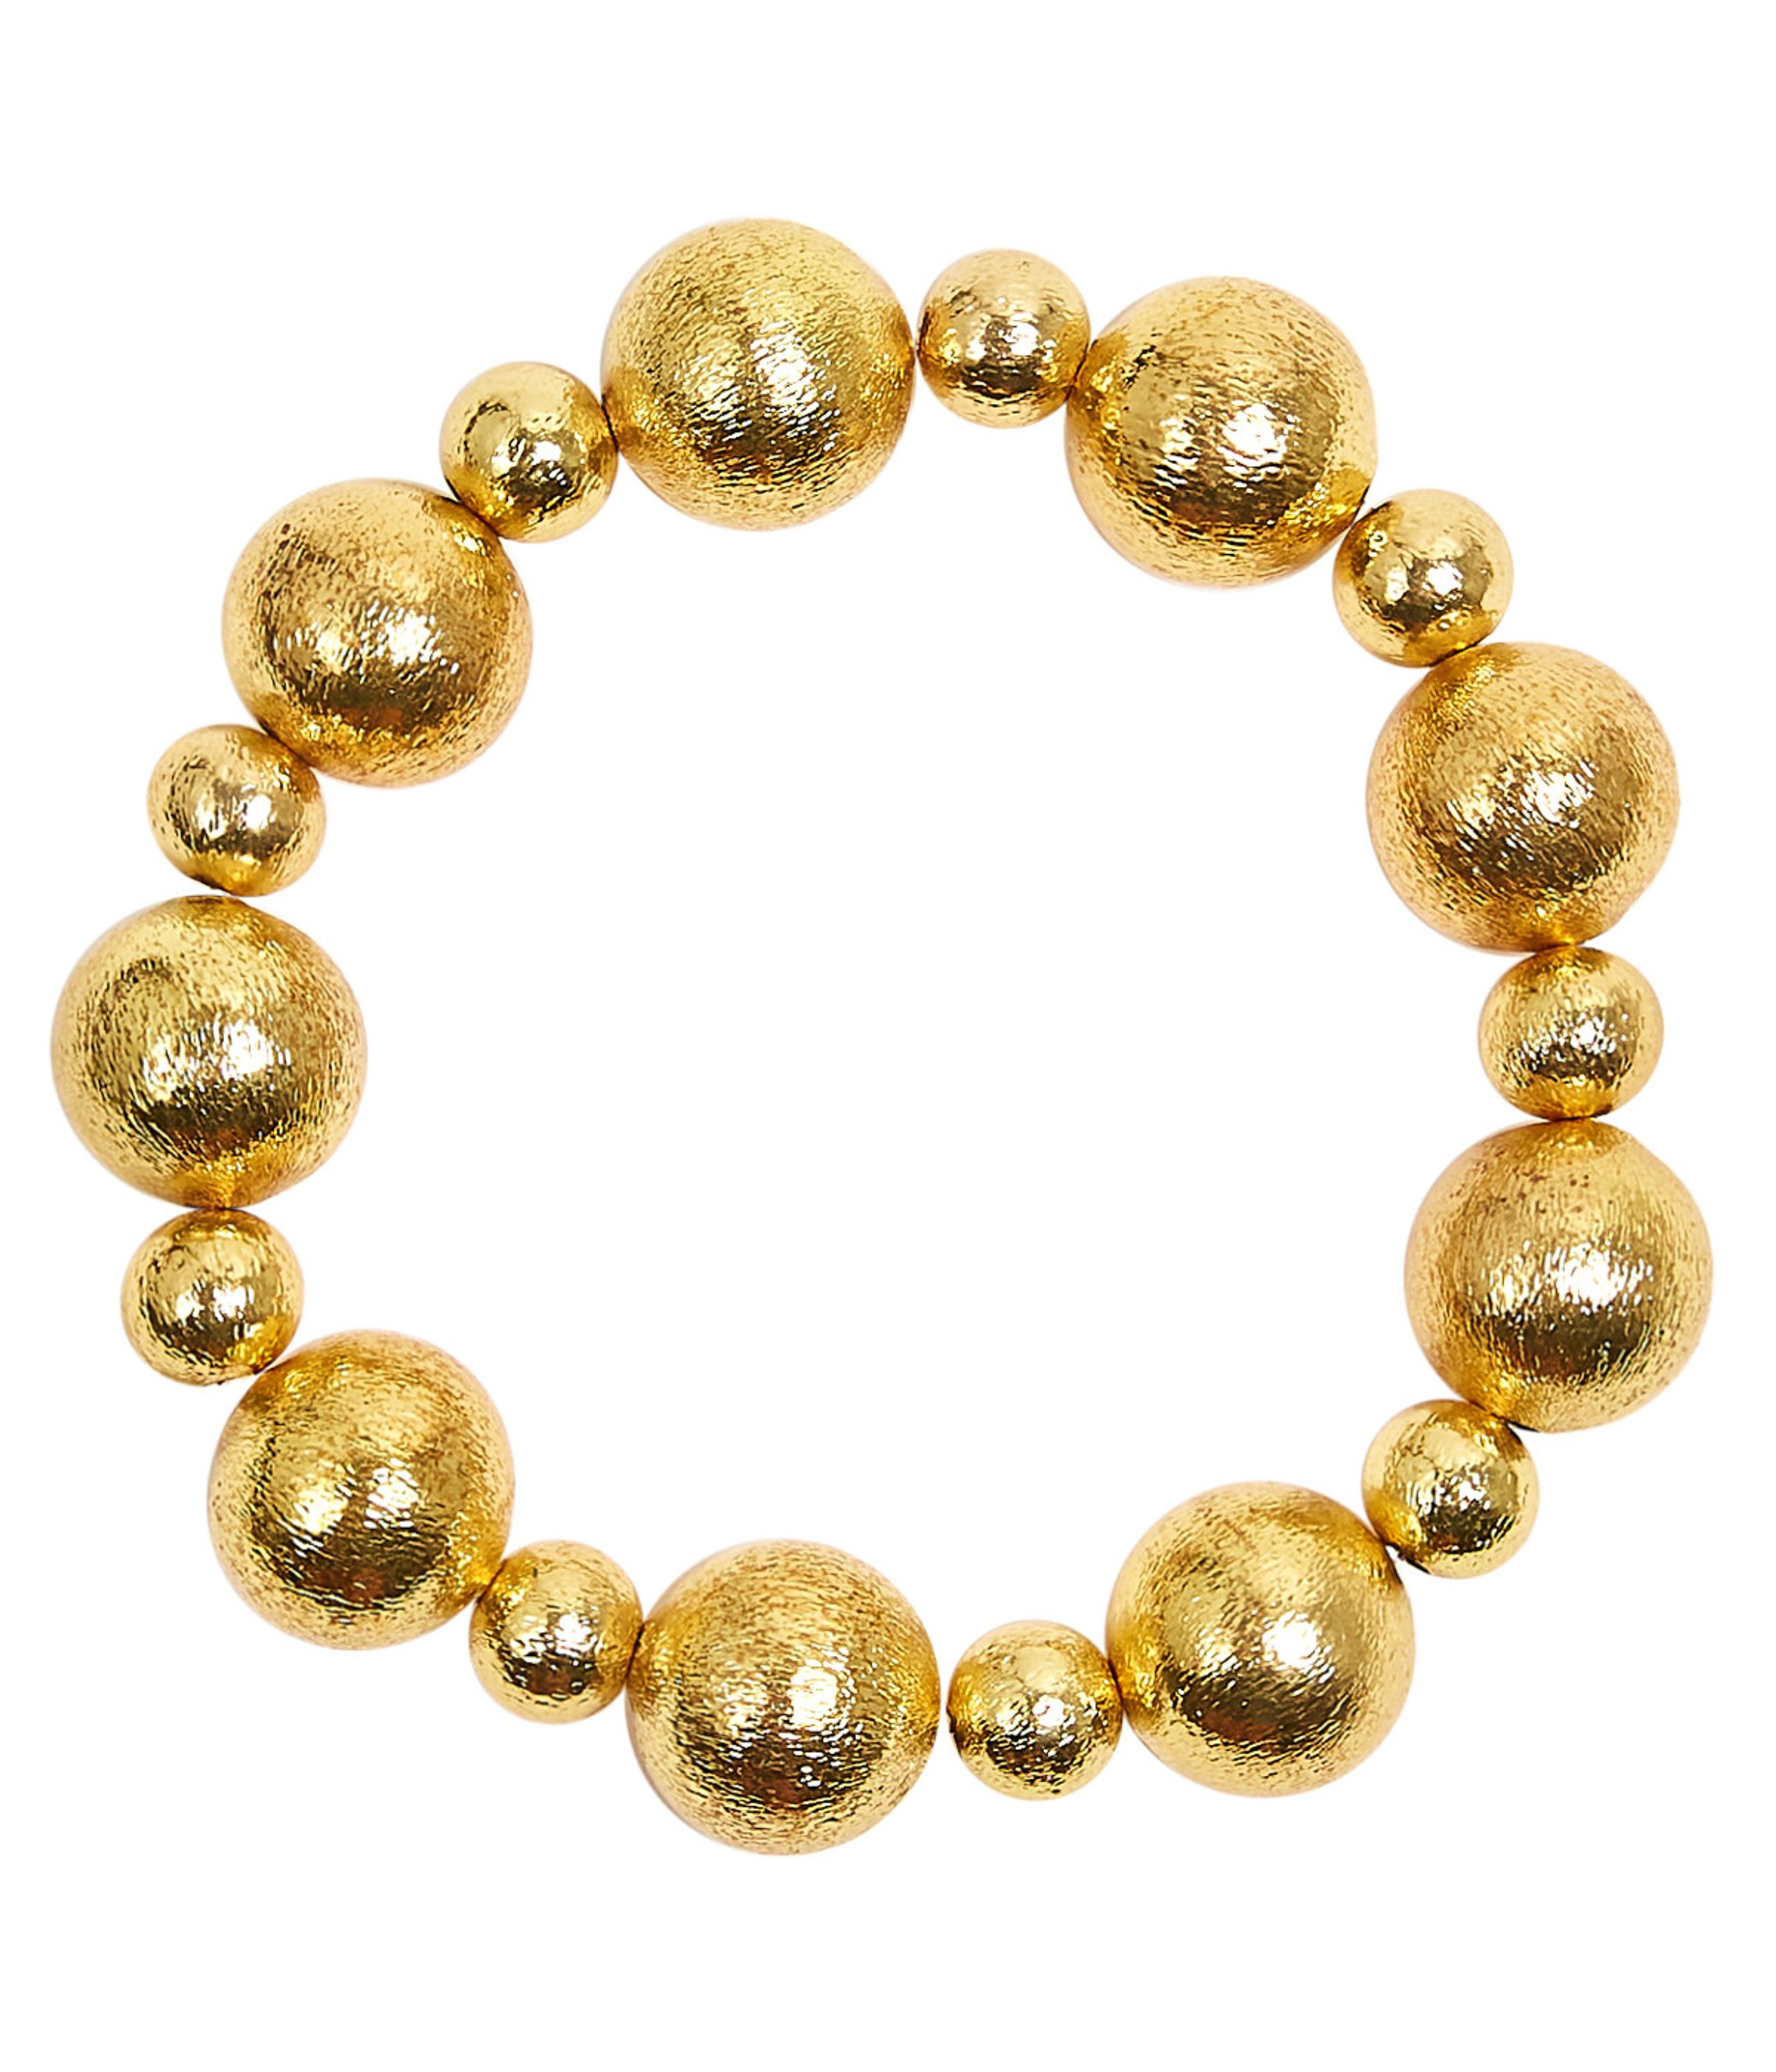 Georgia Bracelet - Mixed Beads  14mm and 6mm beads | Lisi Lerch Inc